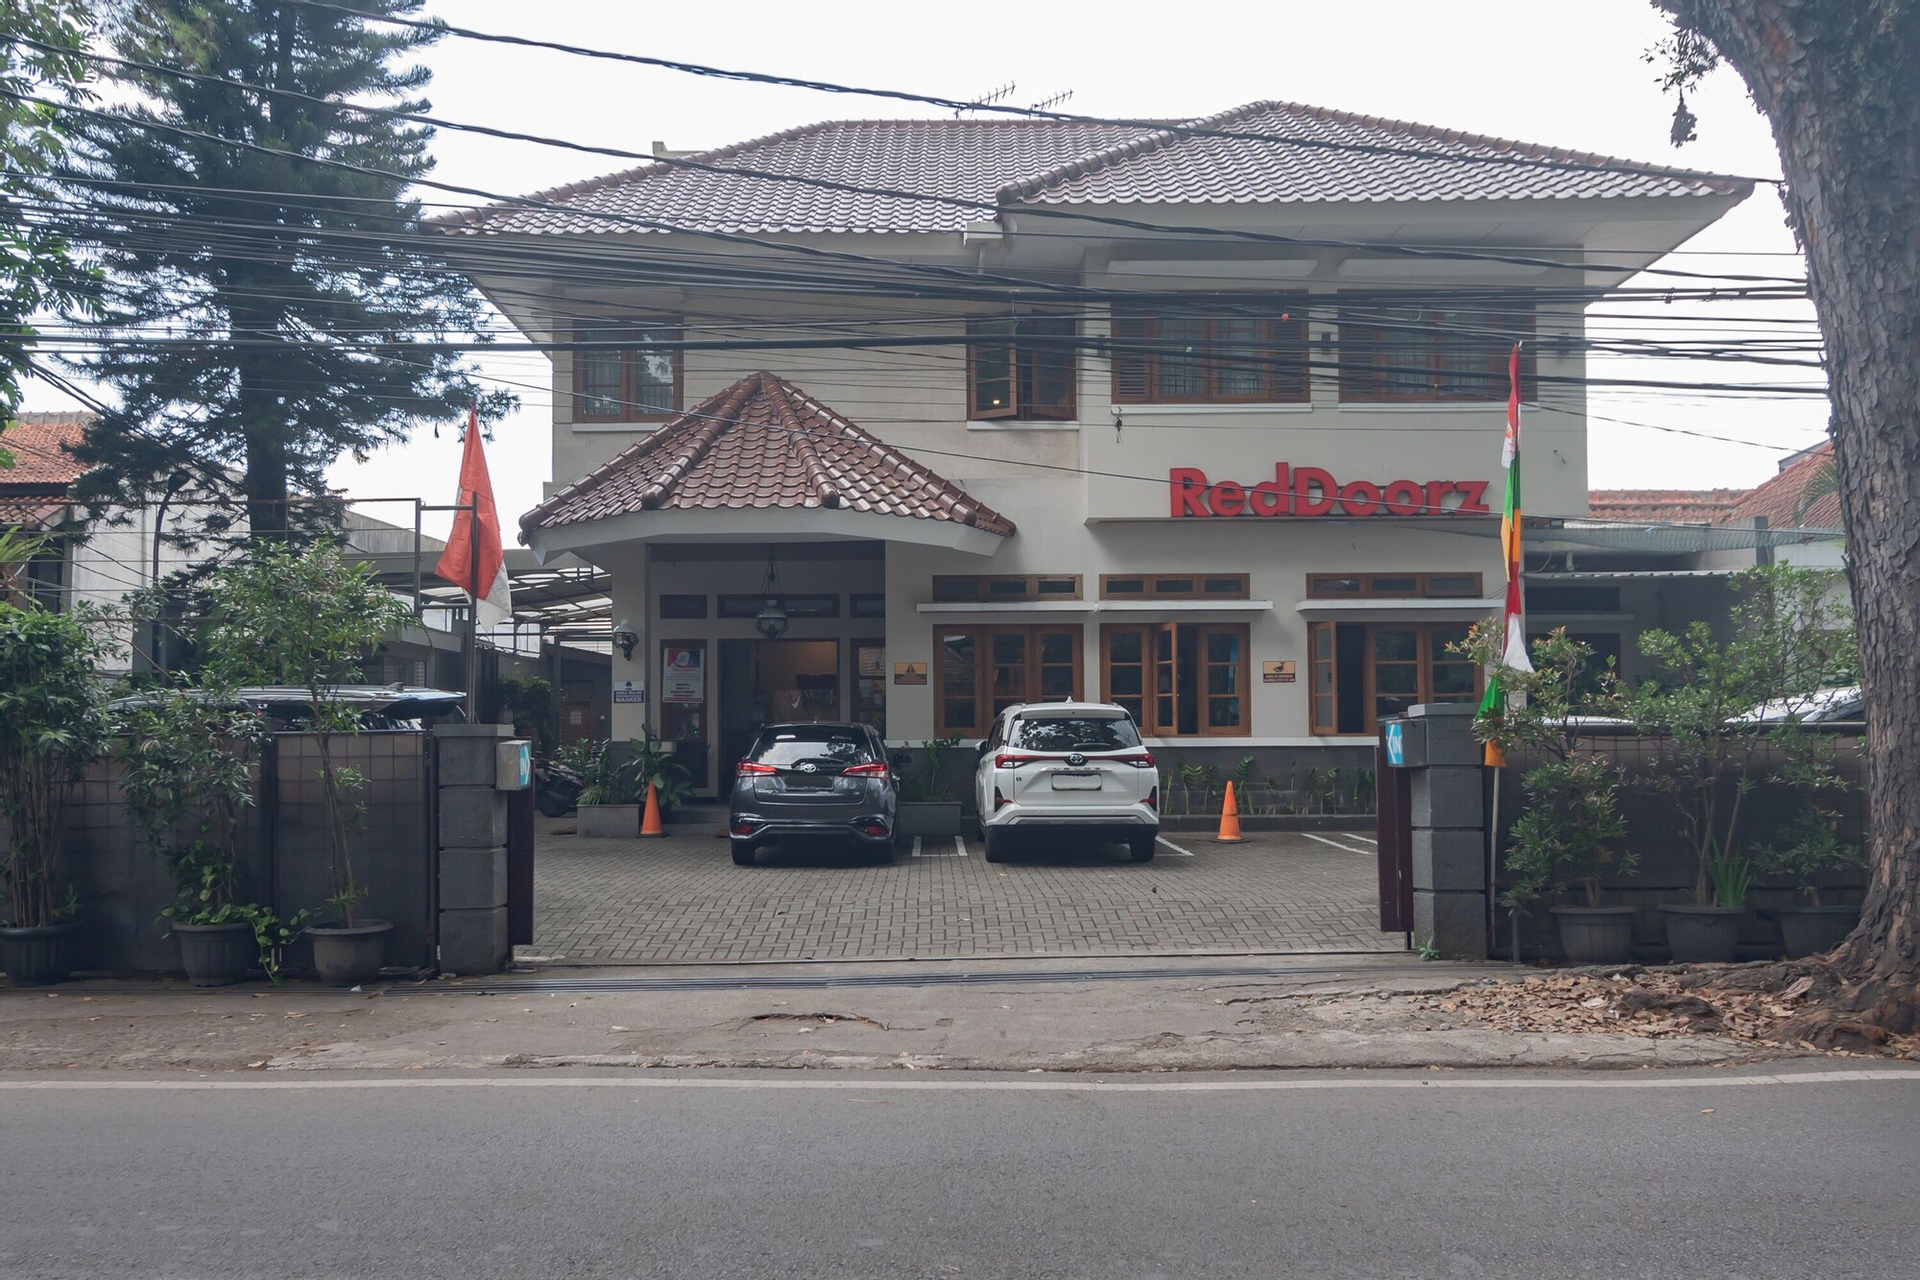 Exterior & Views 2, RedDoorz near Simpang Dago 2, Bandung